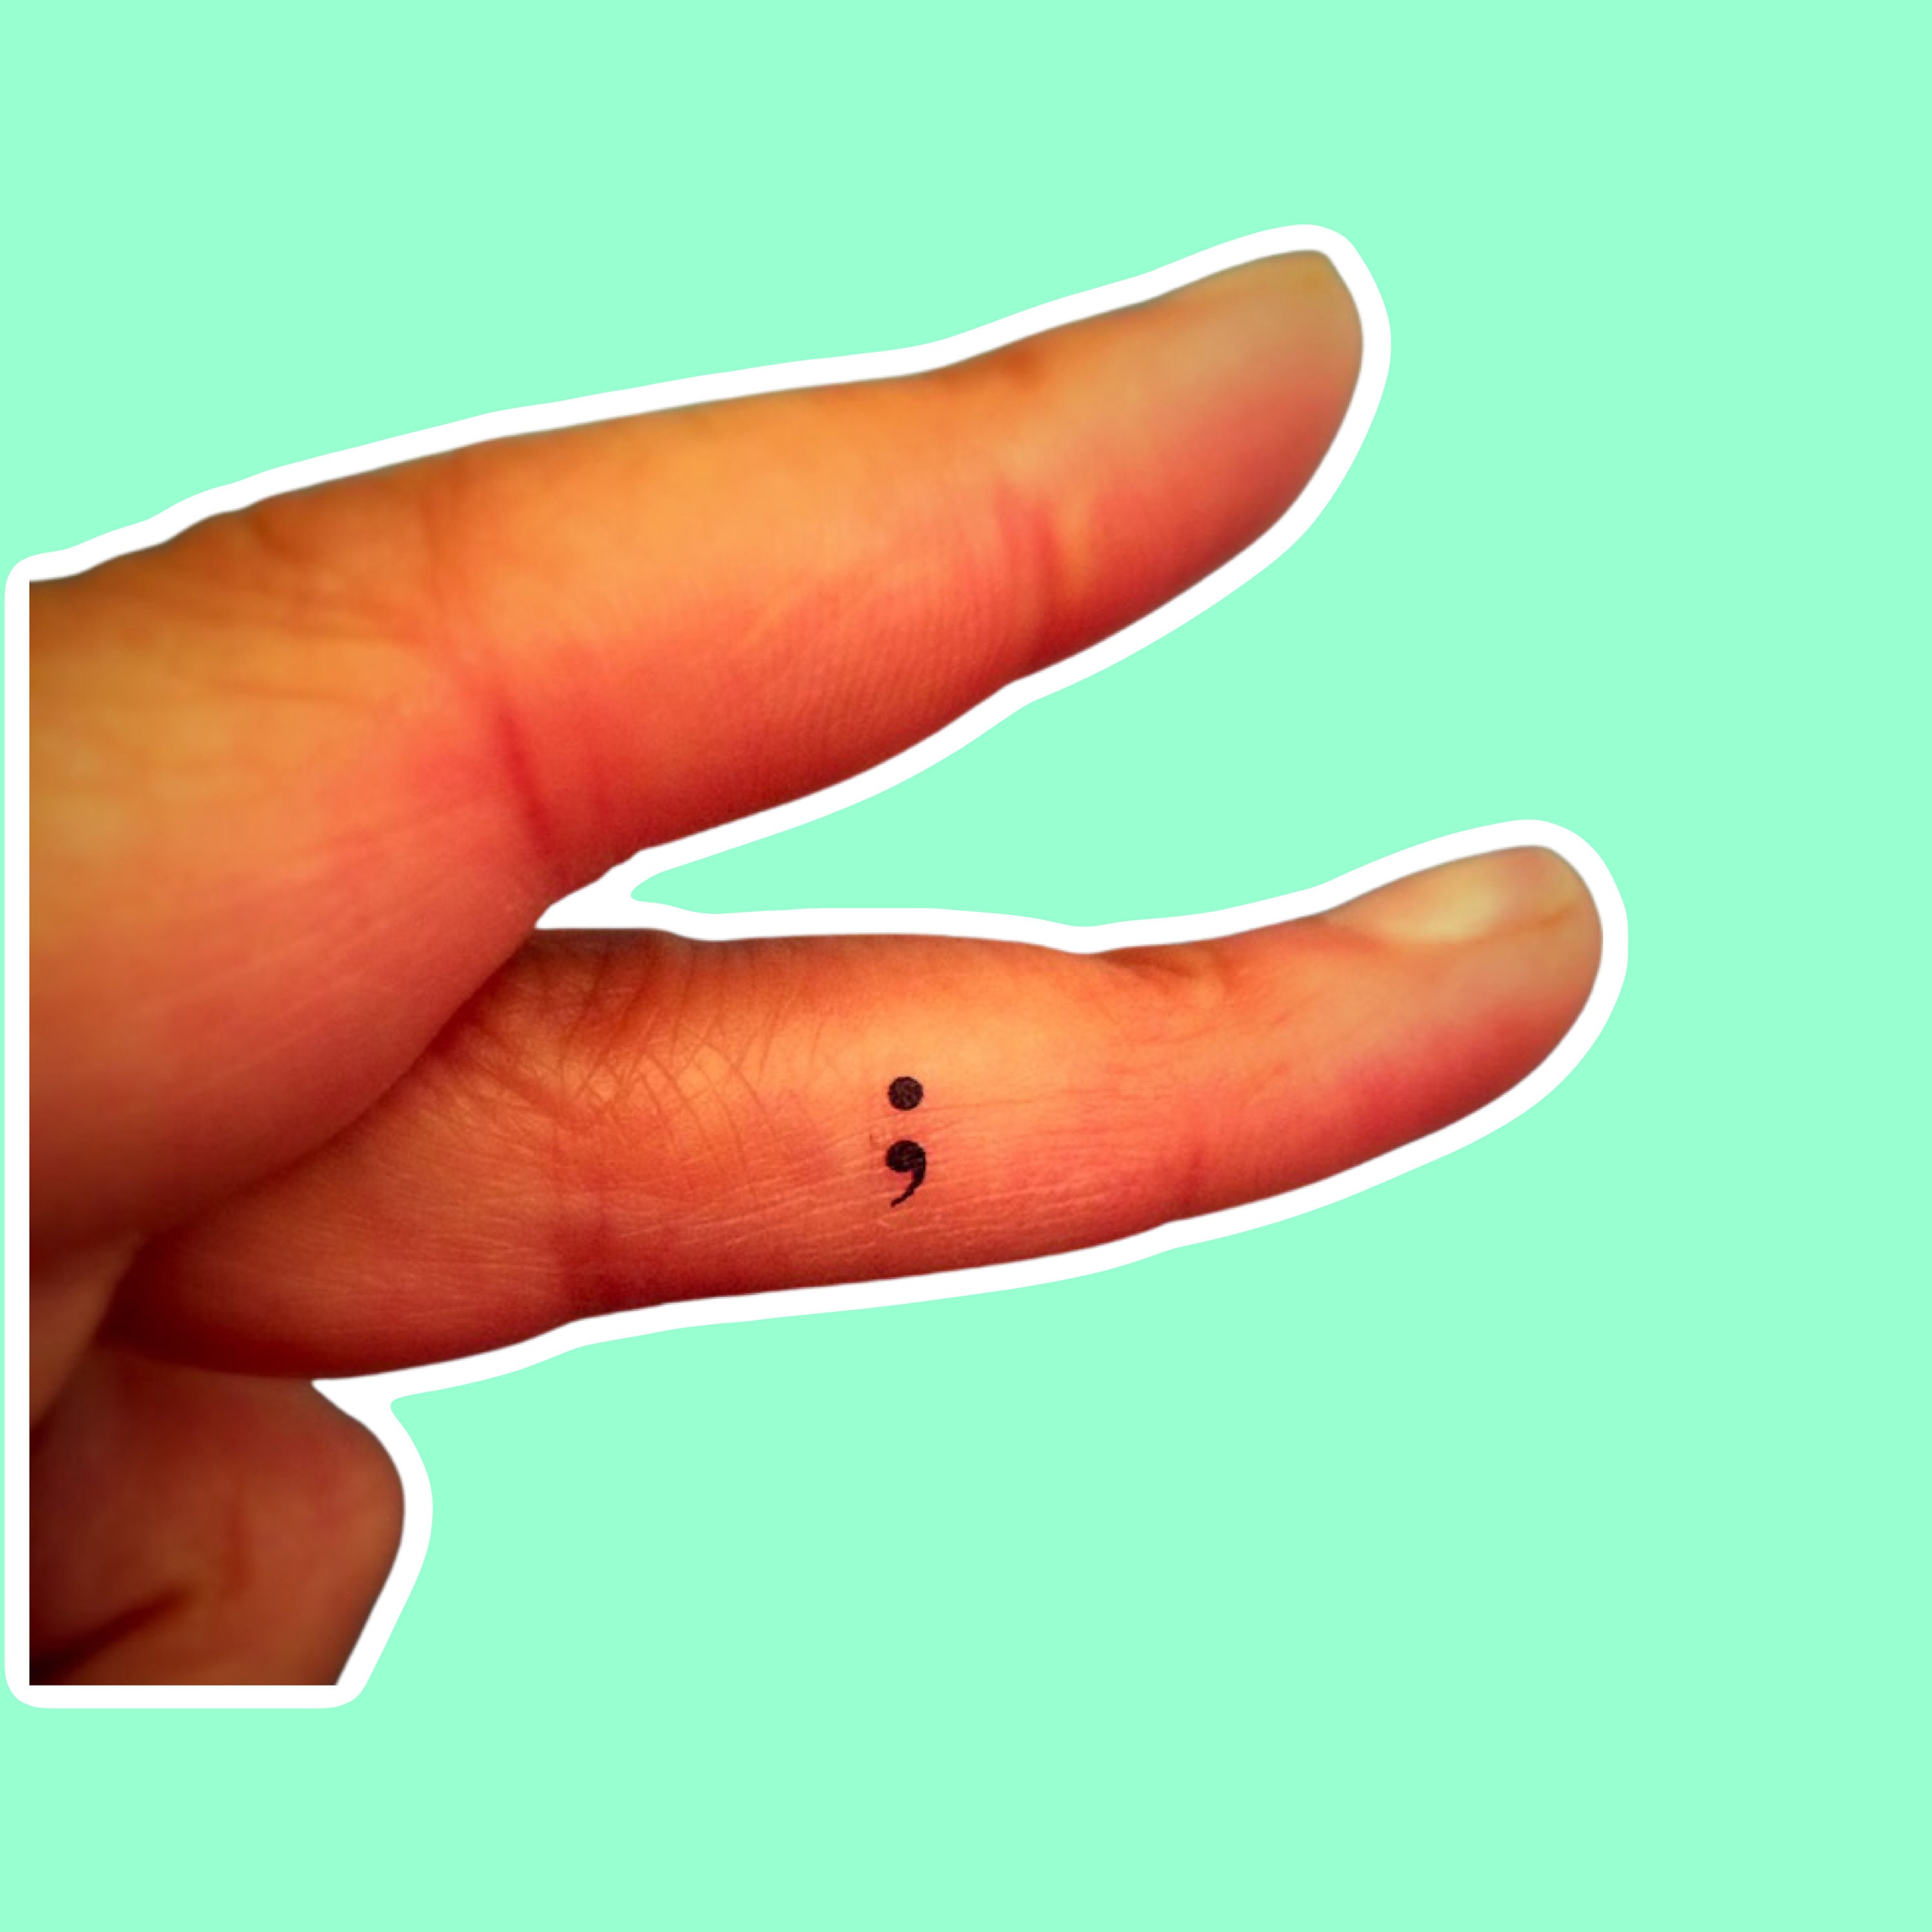 51 Semicolon Tattoos On Wrist You Should Always Think